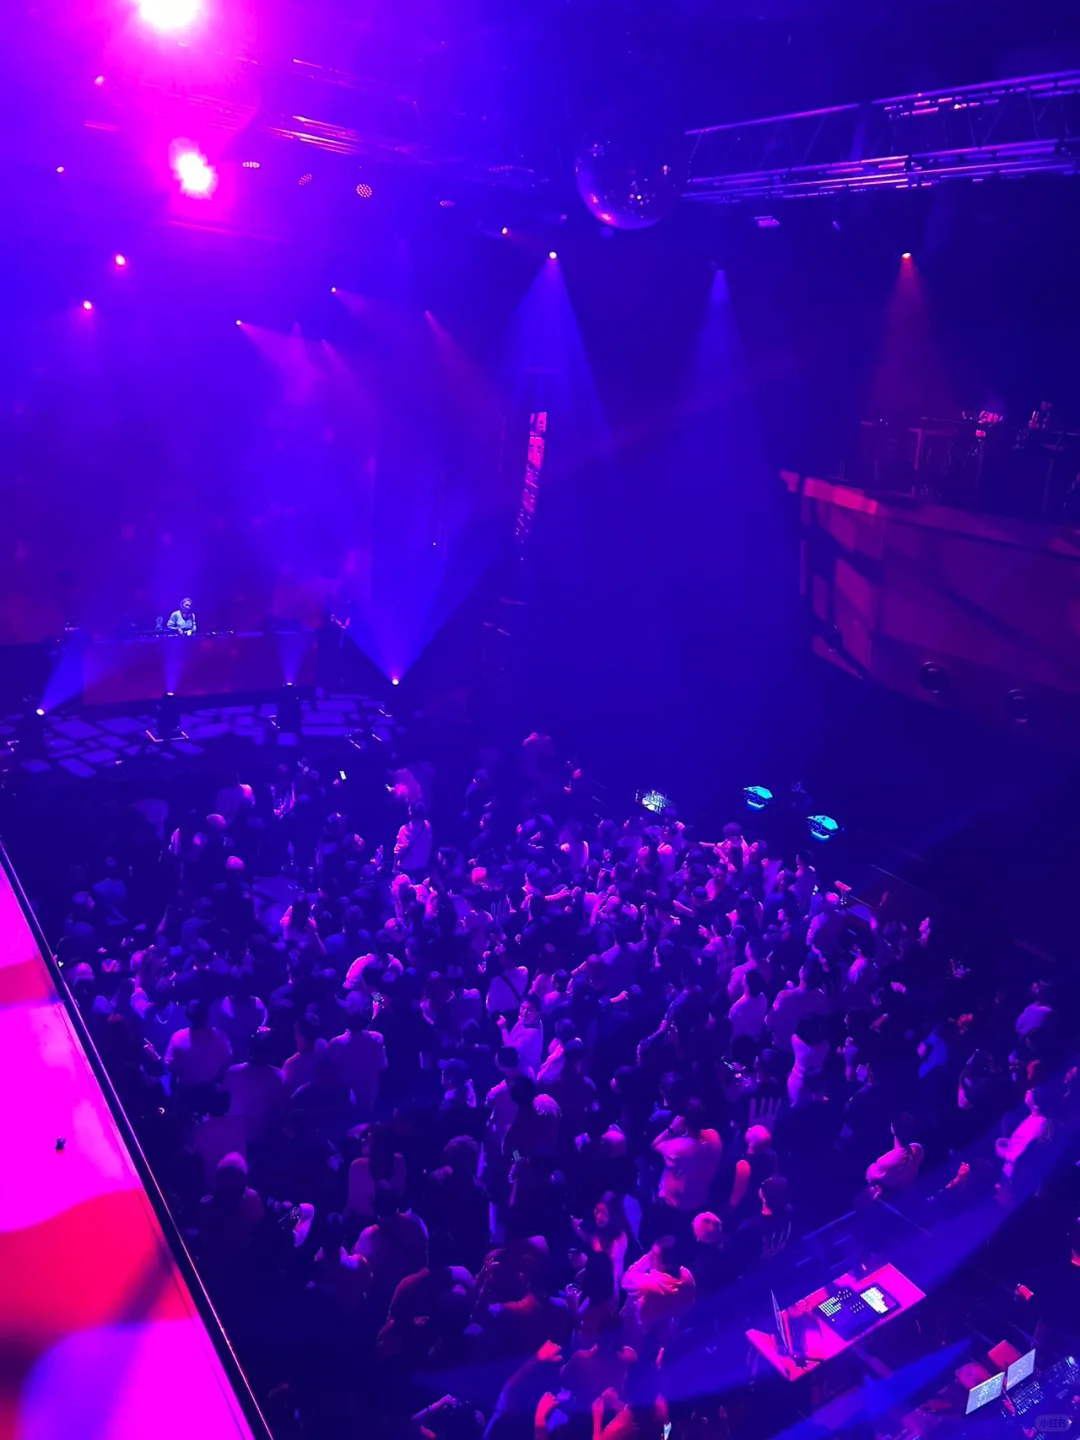 Tokyo-Tokyo Nightclub: ZEROTOKYO Japan's largest nightclub opening night